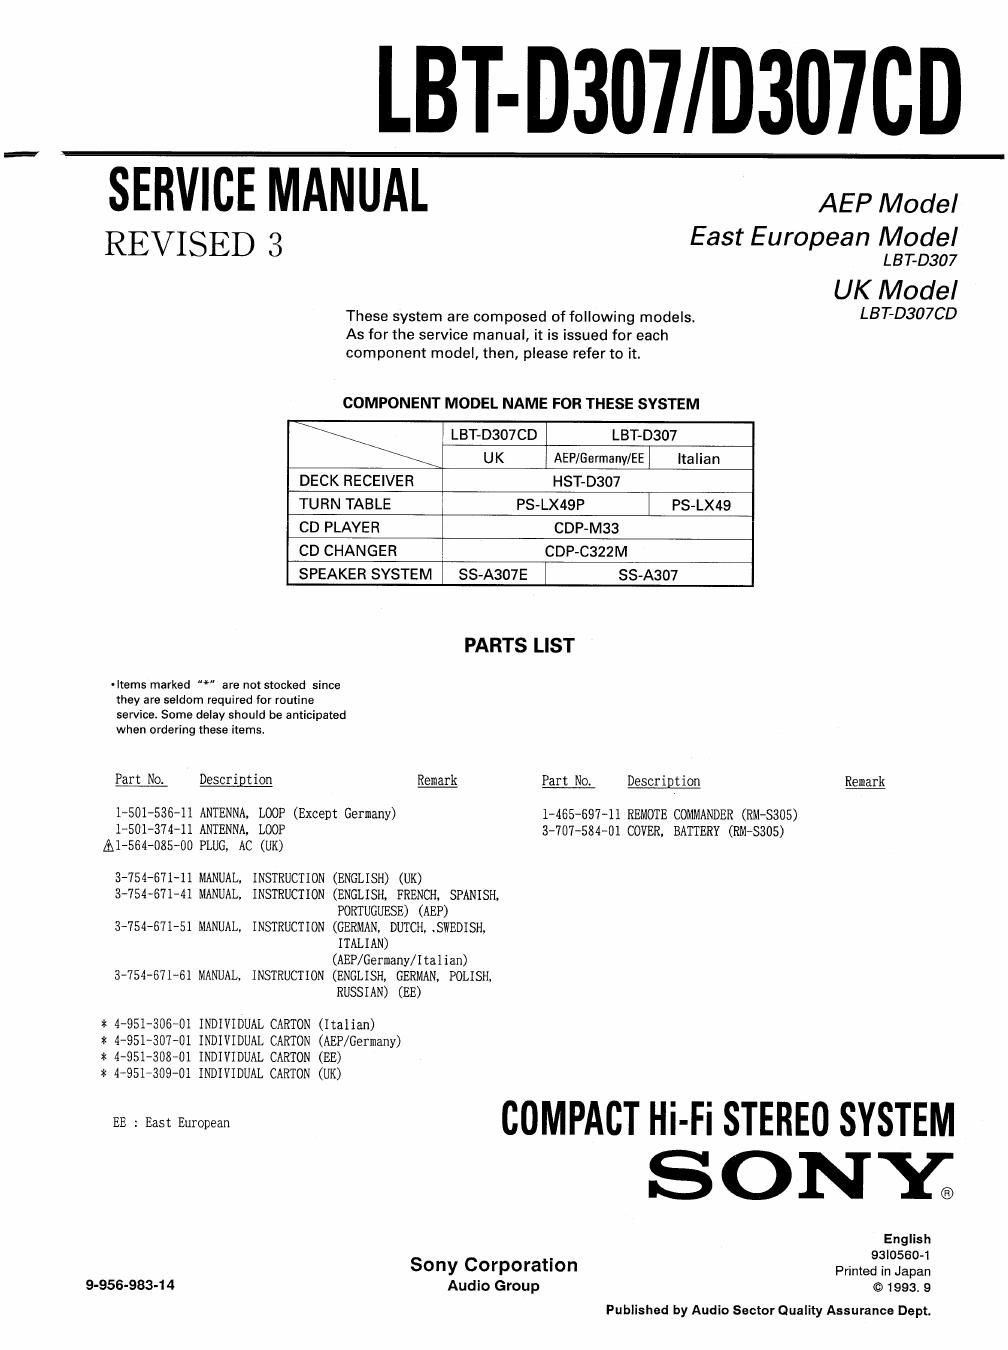 sony lbt d 307 cd service manual